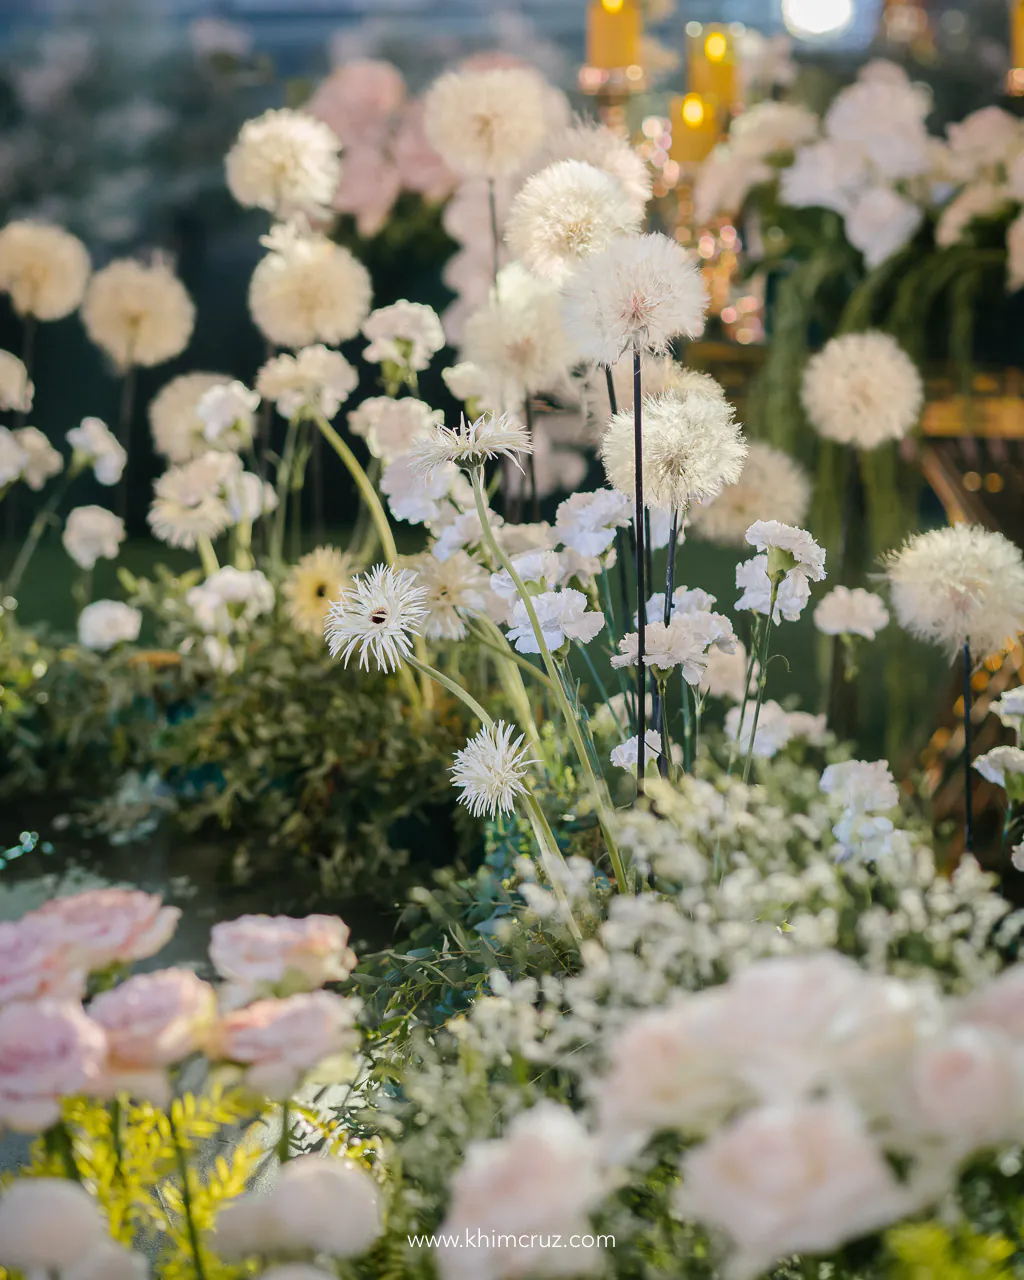 fresh flower design details at a dreamy conservatory inspired wedding reception